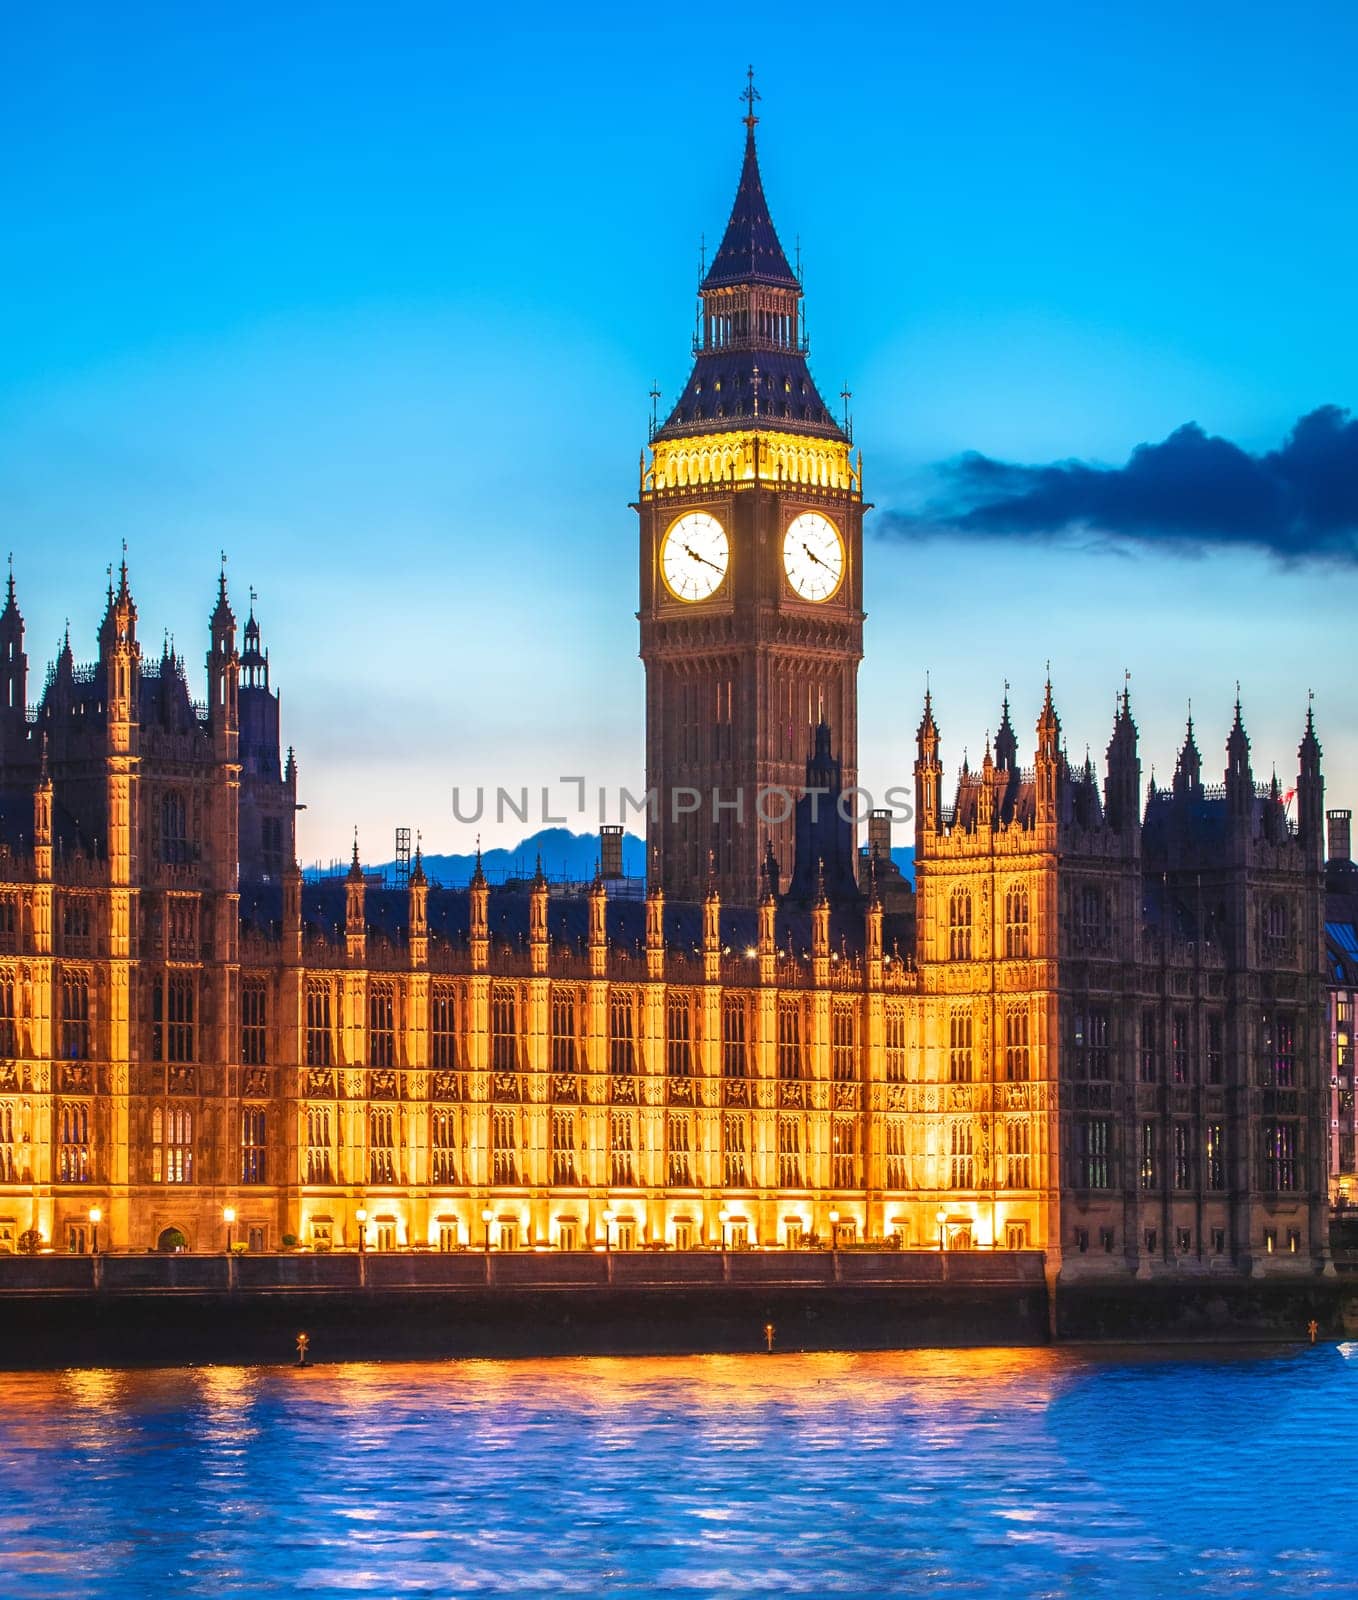 Big Ben clock tower in London sundown view from Thames river, capital of UK famous landmark